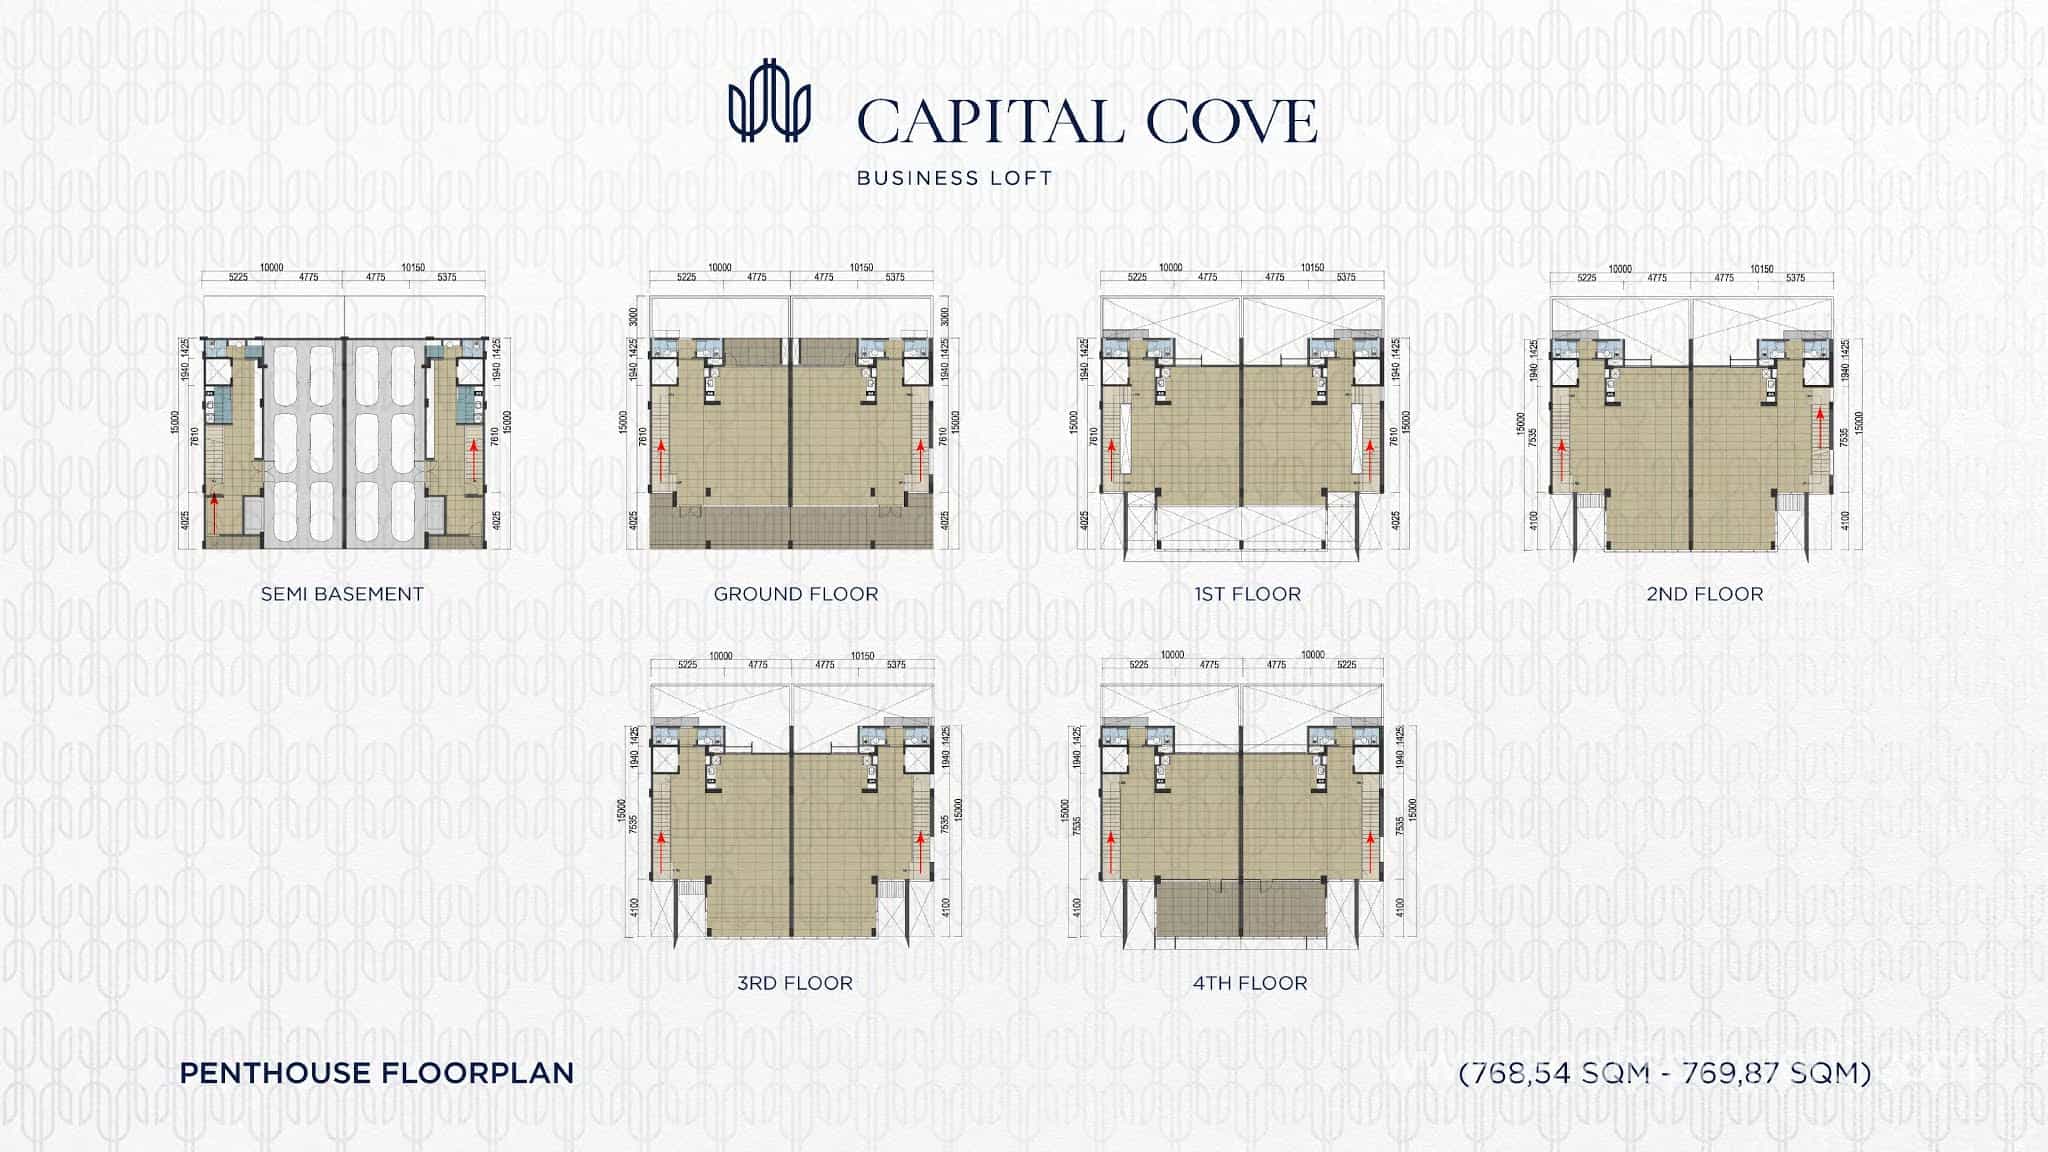 Denah Capital Cove Tipe Penthouse